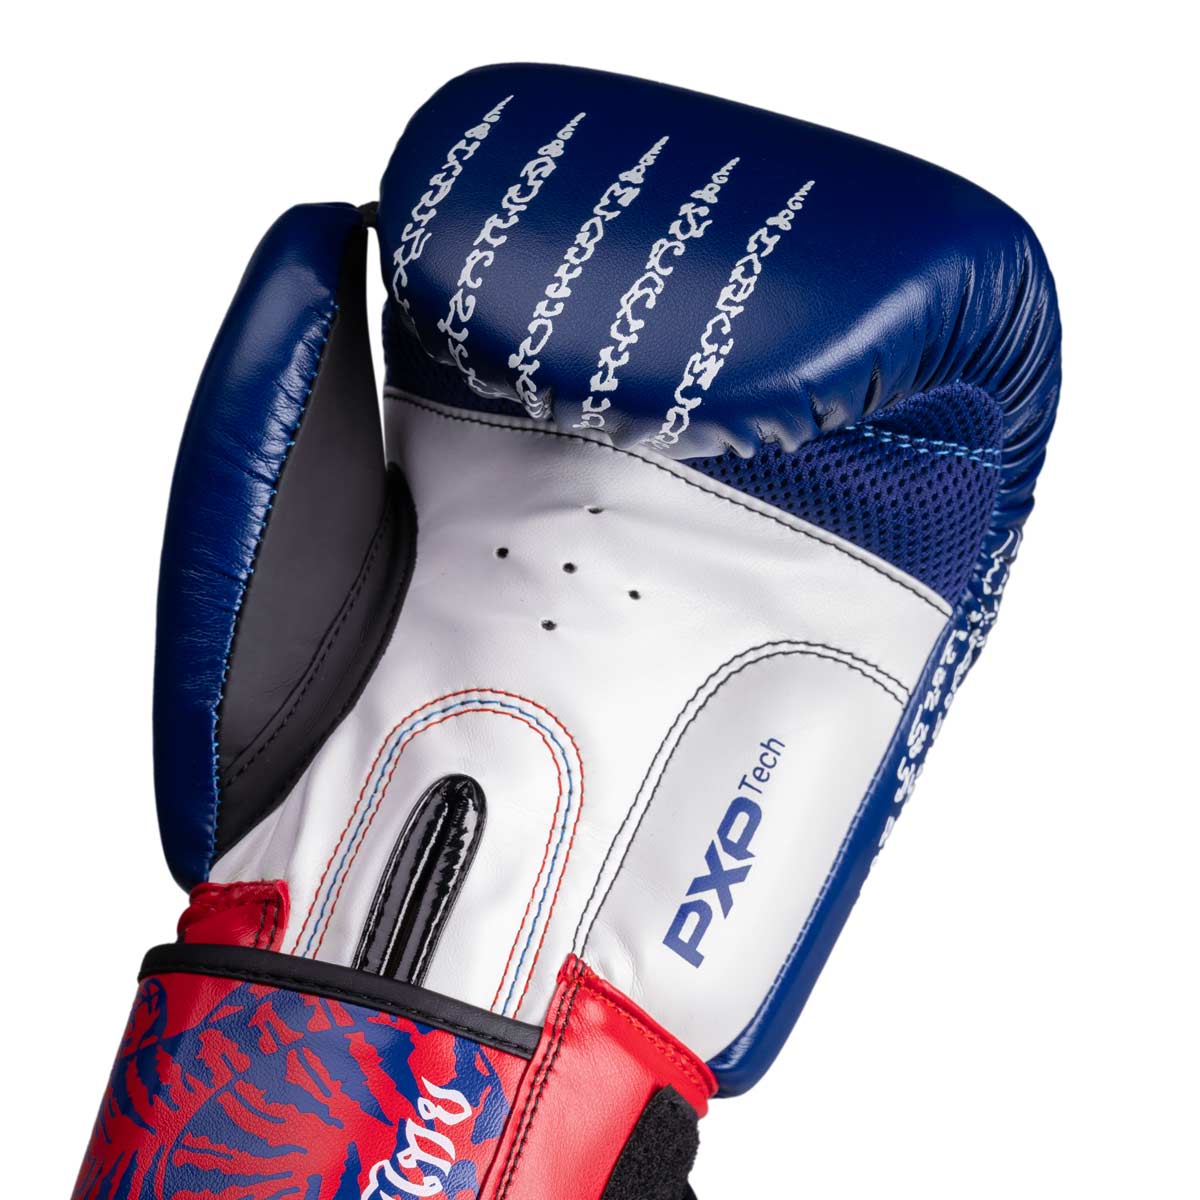 Die hochwertige Verarbeitung der Phantom Muay Thai Boxhandschuhe. Produziert aus qualitativem Phantom PXP Tech Material in der Farbe Blau/Rot/Weiss.